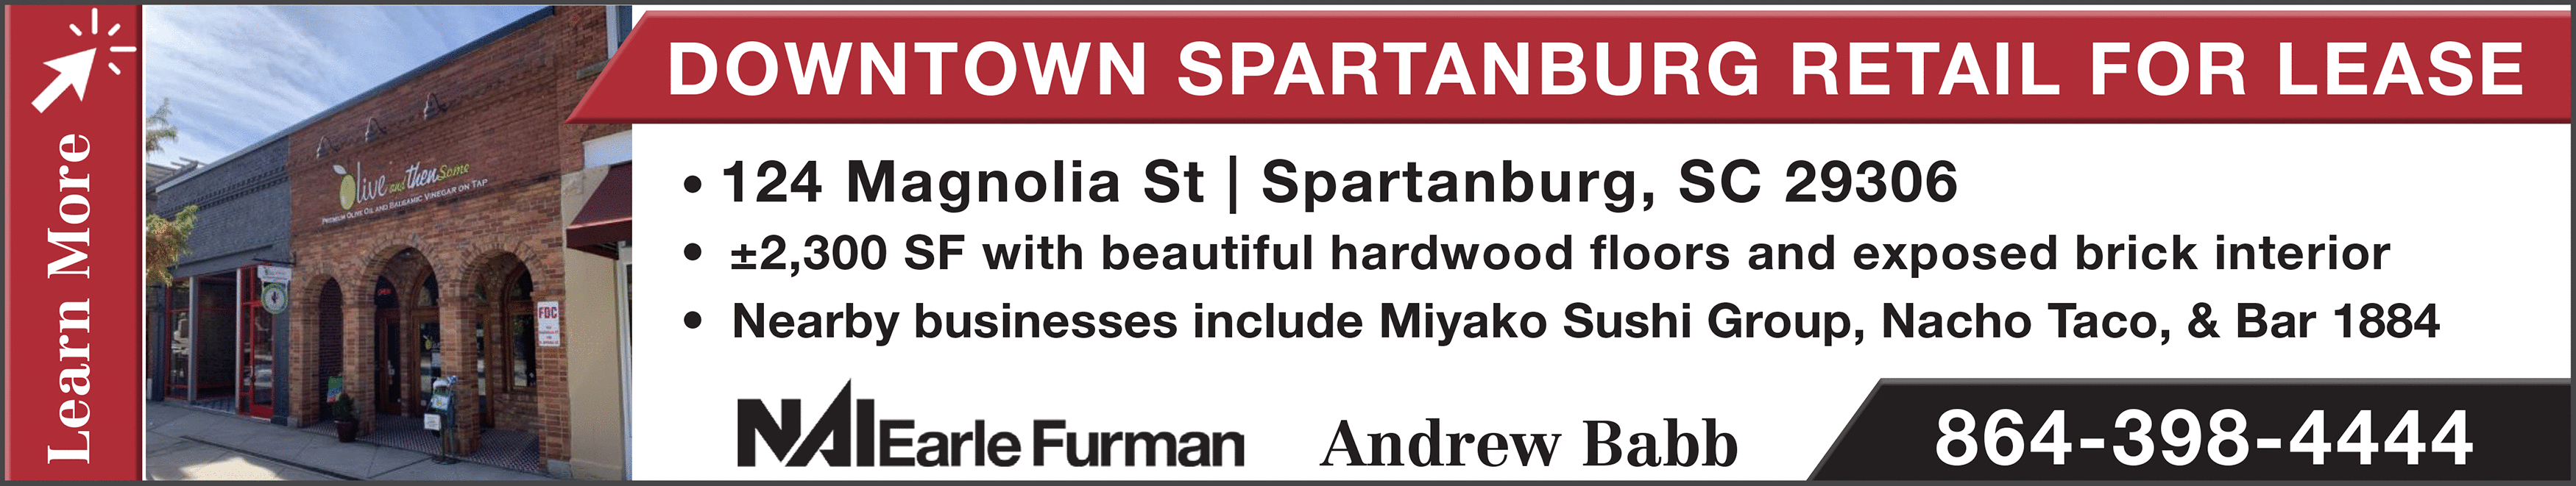 Ad: NAI Earle Furman: Downtown Spartanburg retail for lease